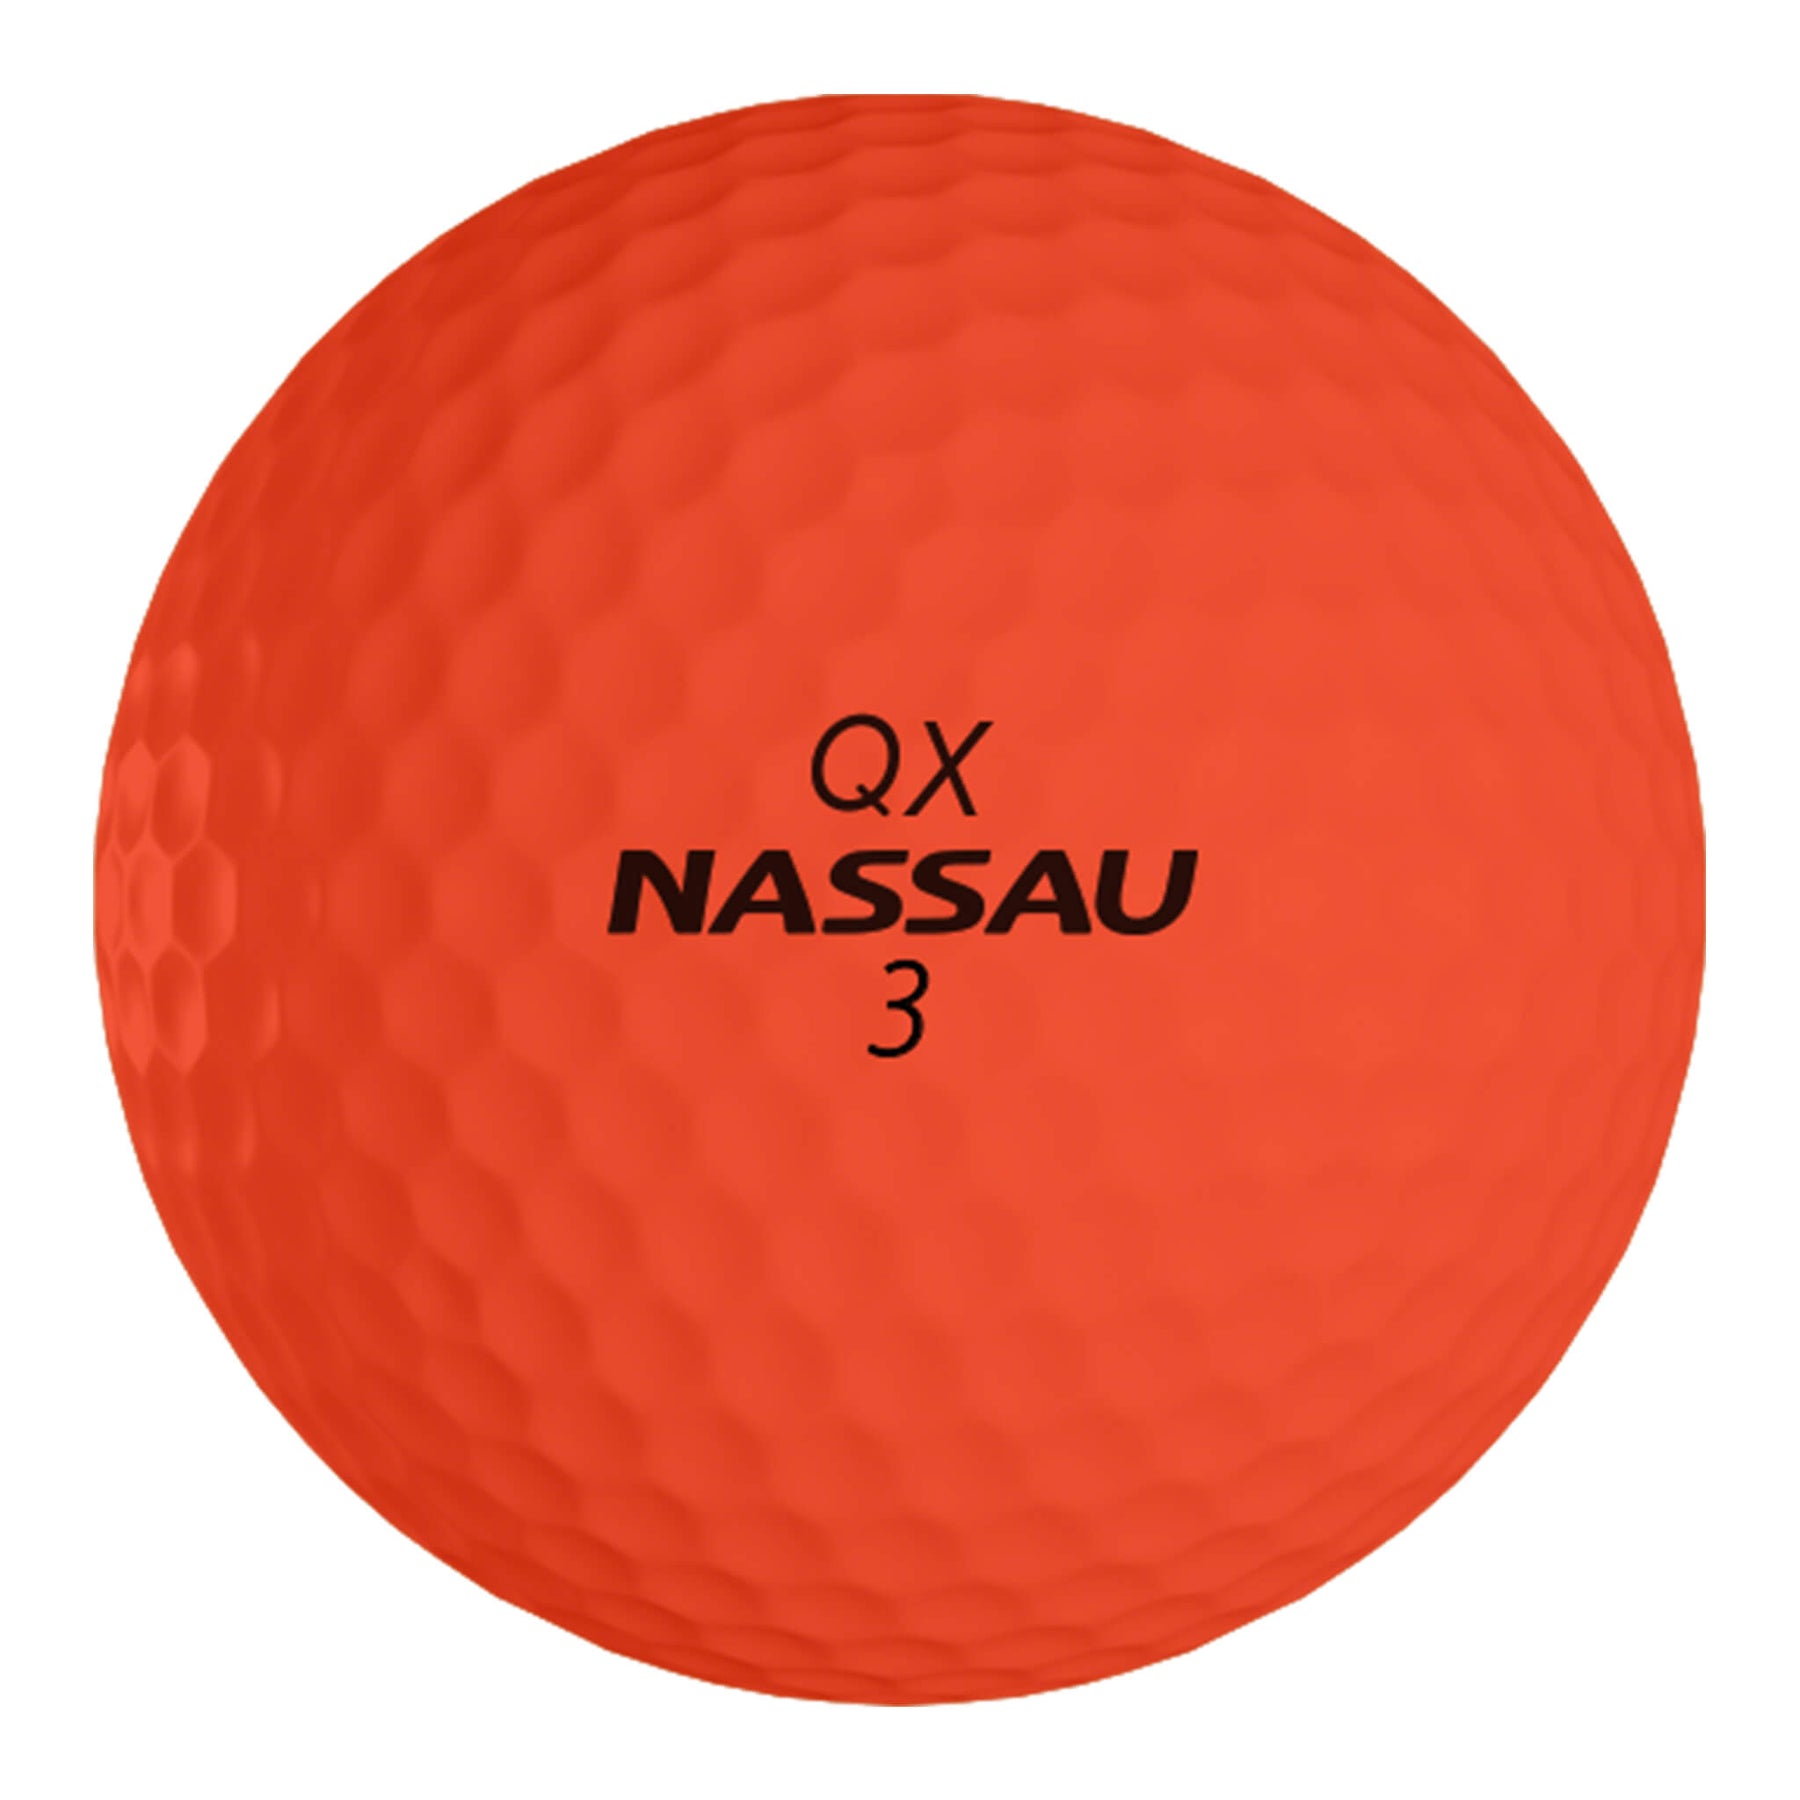 Nassau QX Orange